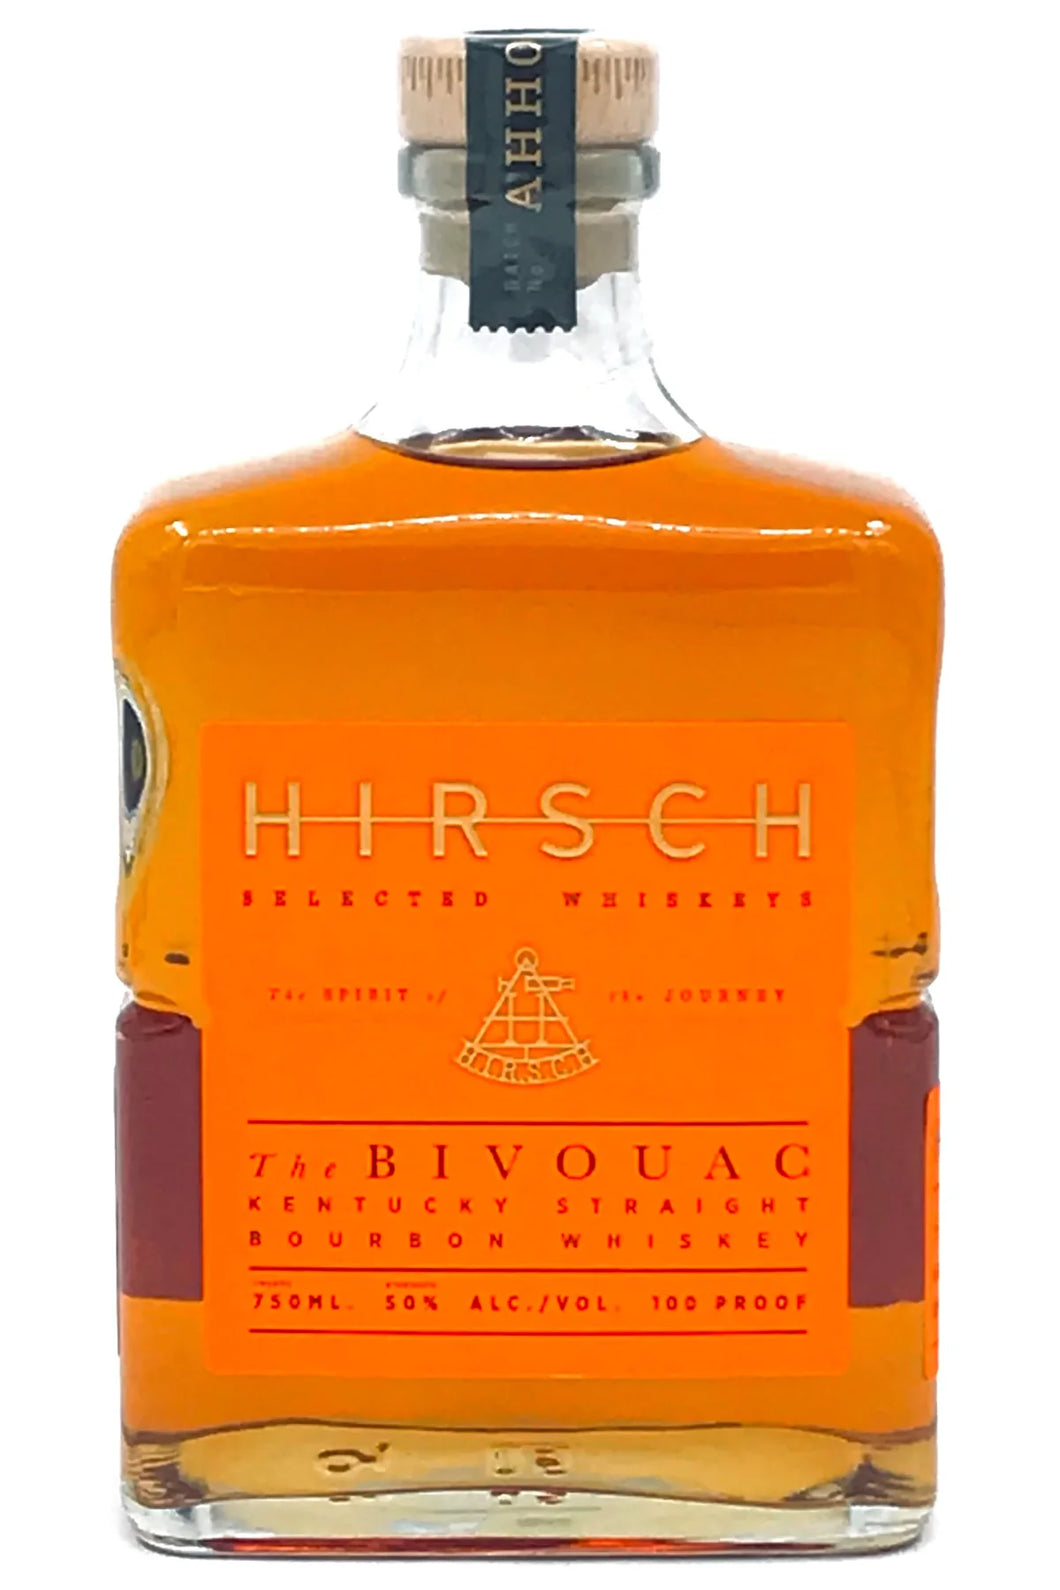 Hirsch 'The Bivouac' Kentucky Straight Bourbon Whiskey